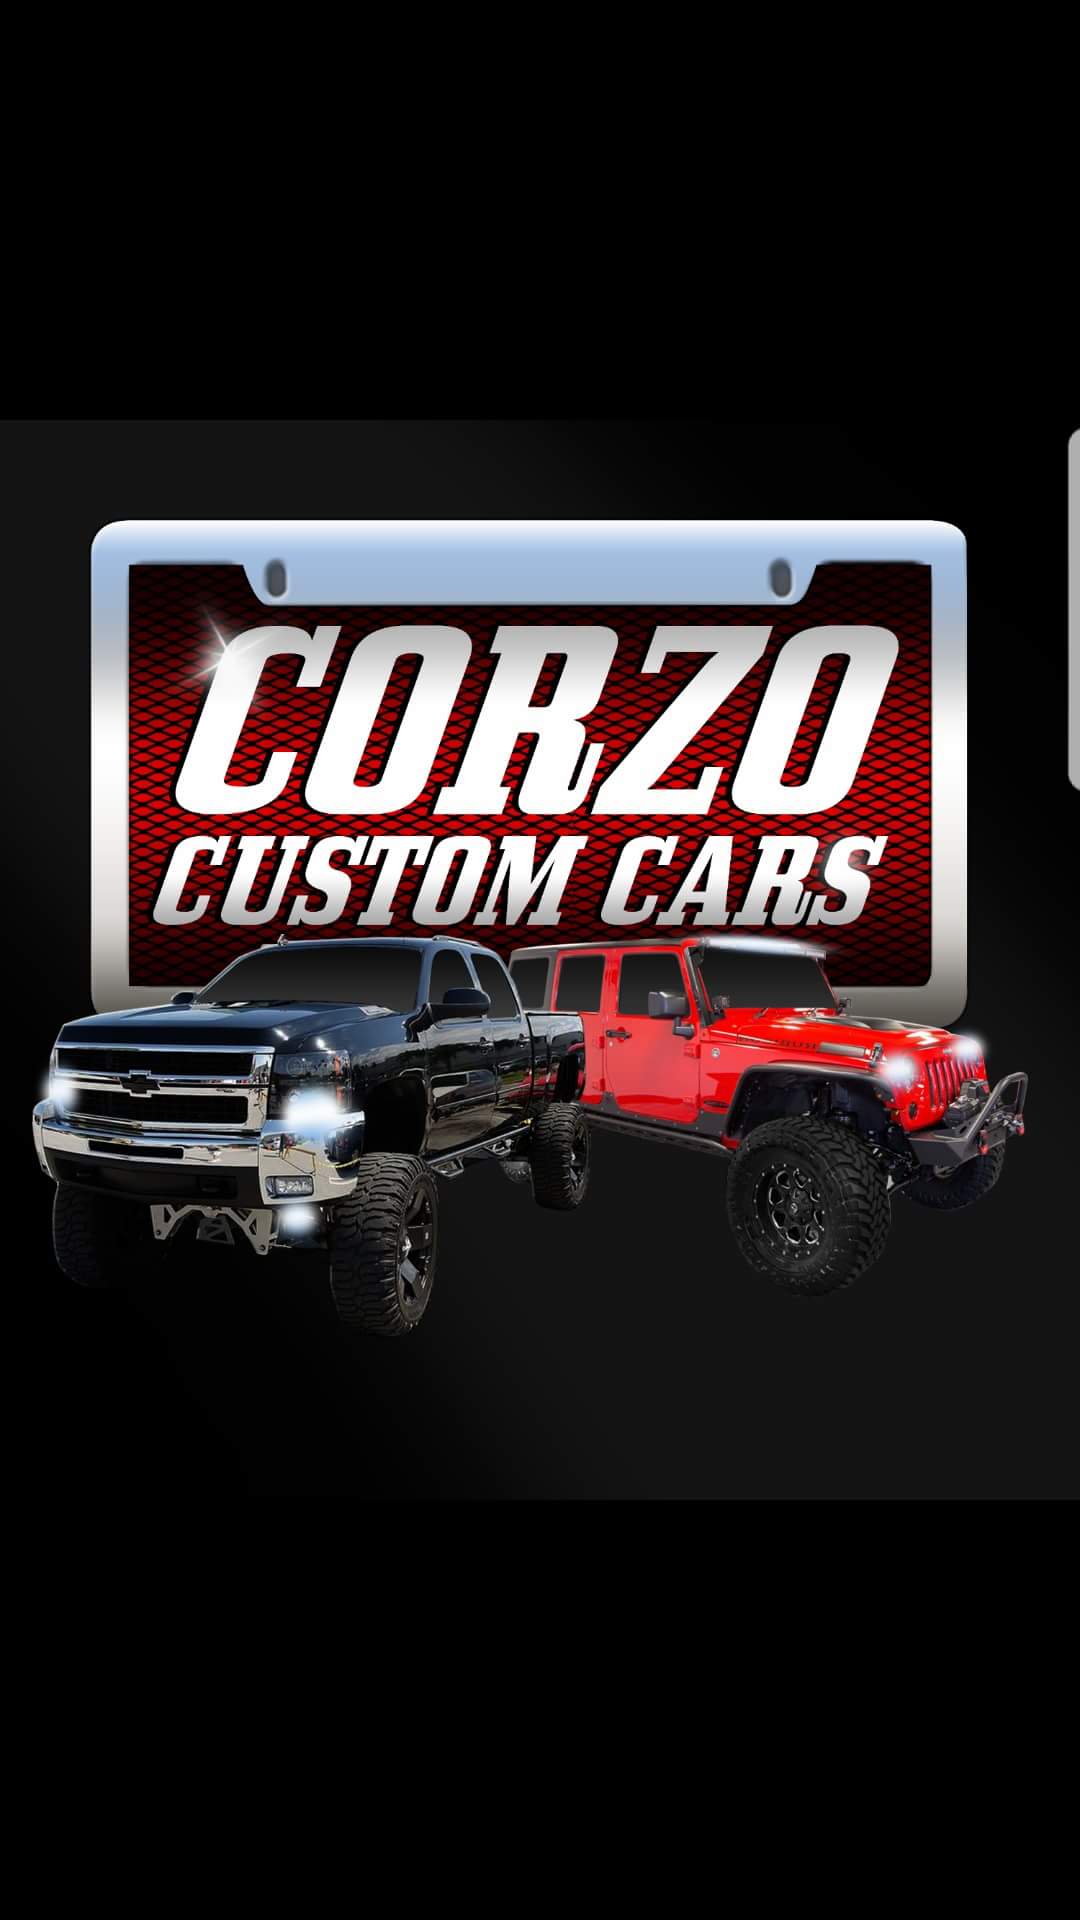 CCC CORZO CUSTOM CARS